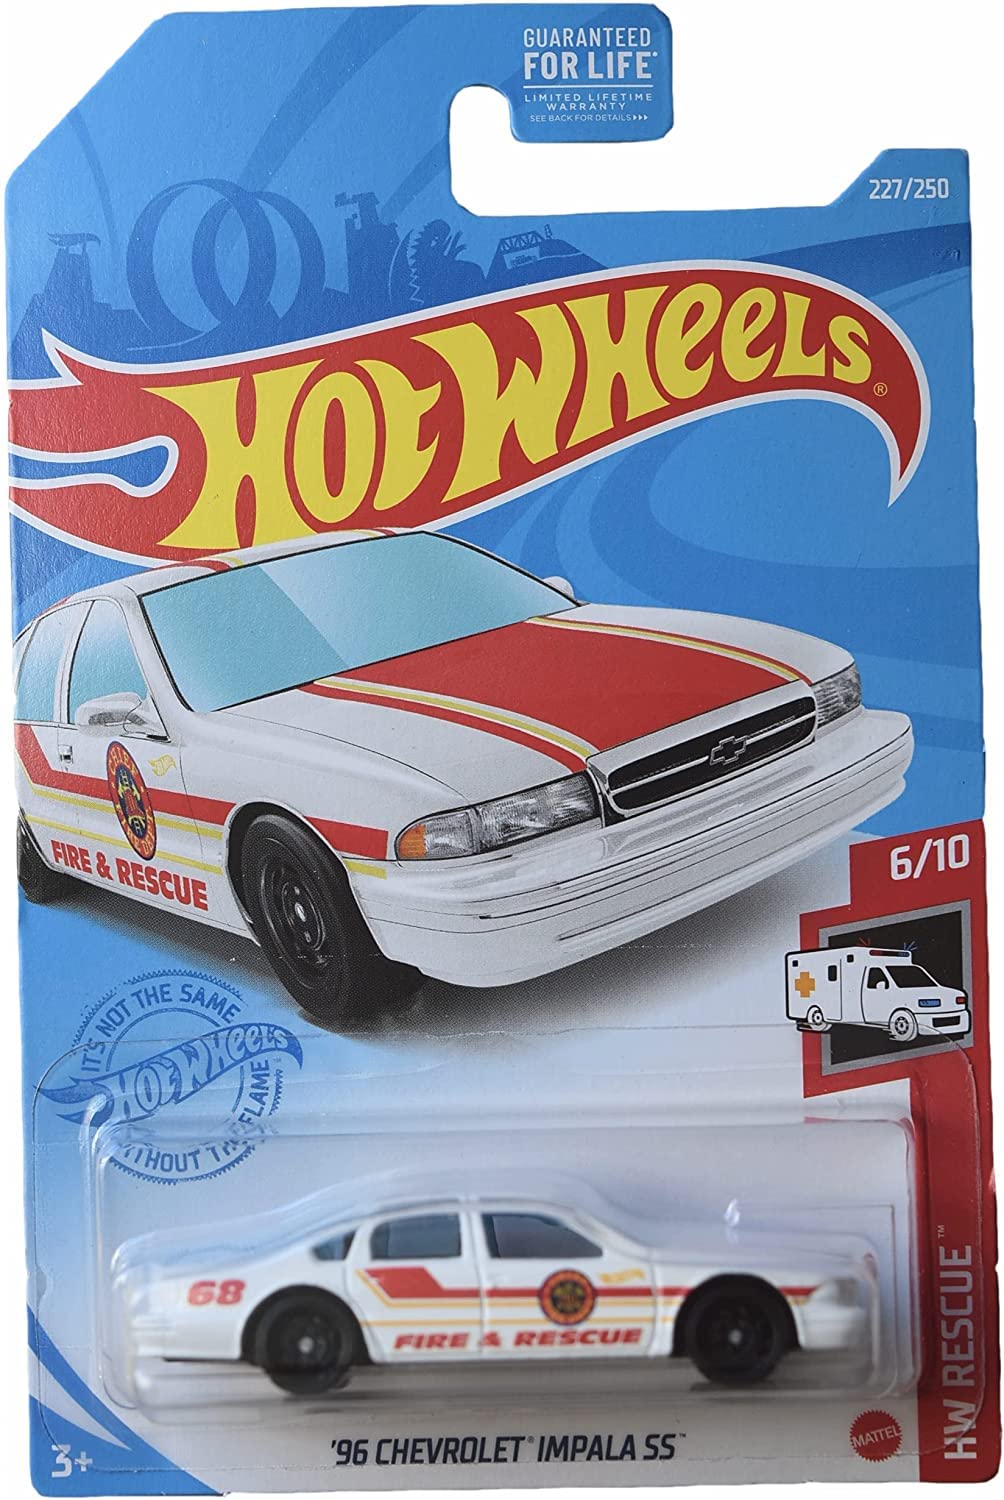 Hot Wheels '96 Chevrolet Impala SS, HW Rescue 6/10, 227/250